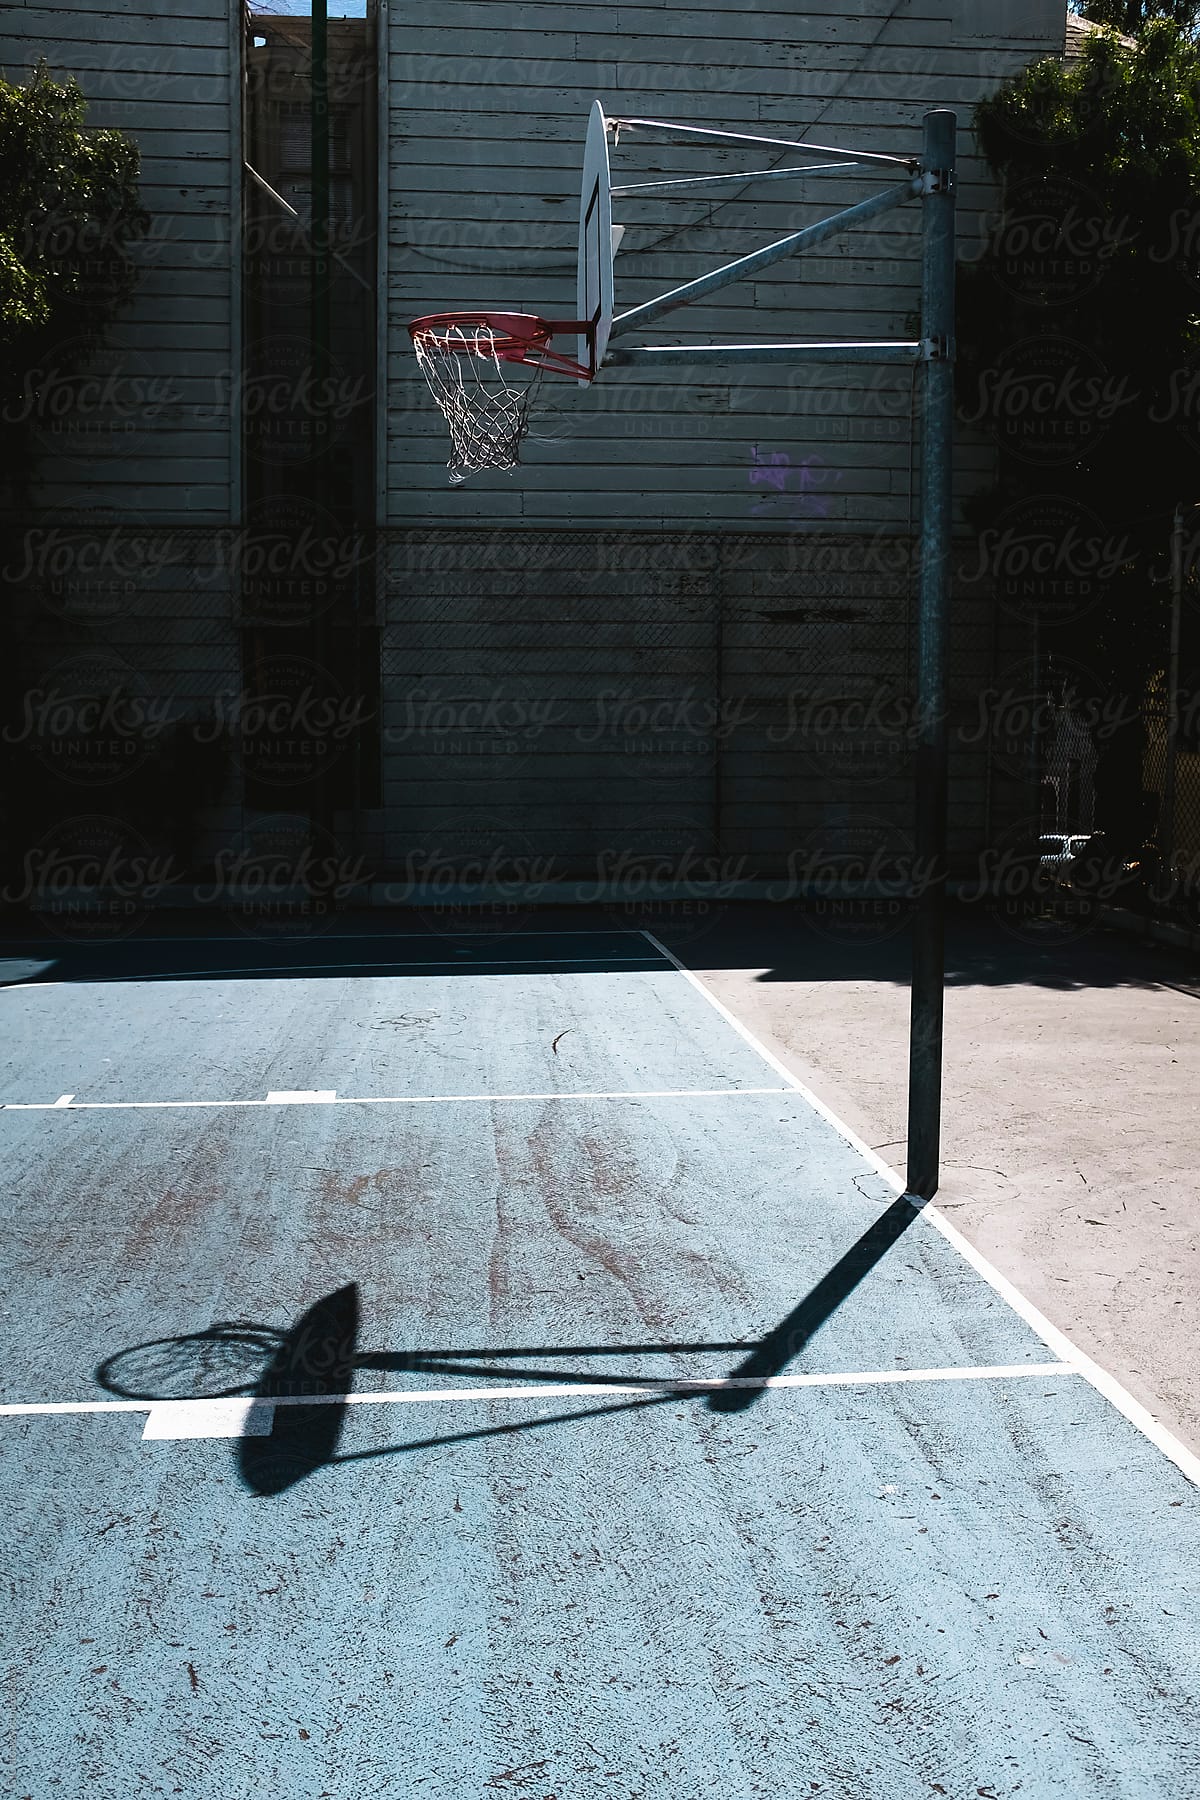 Basketball field in urban area